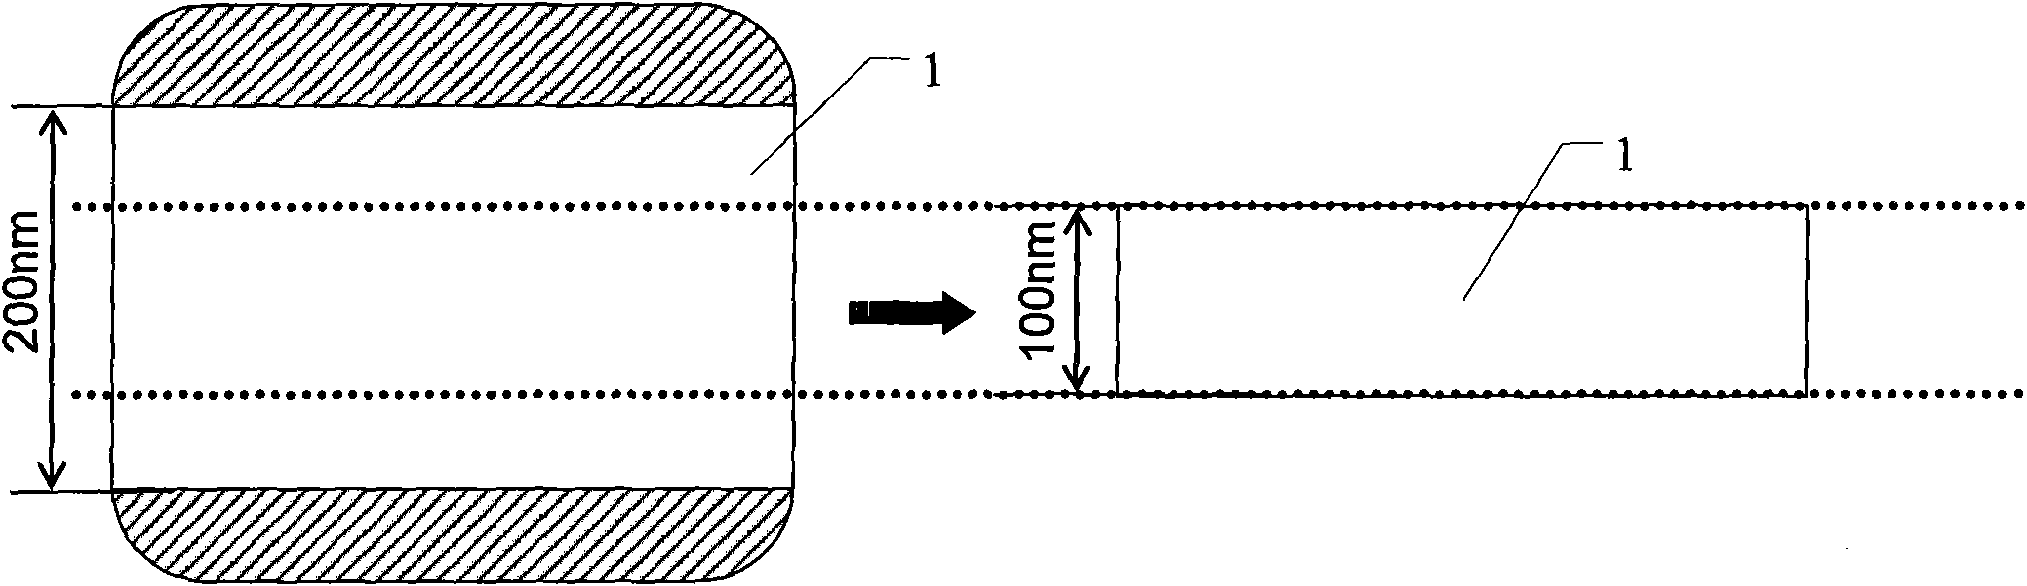 Preparation method of observation sample for transmission electron microscope